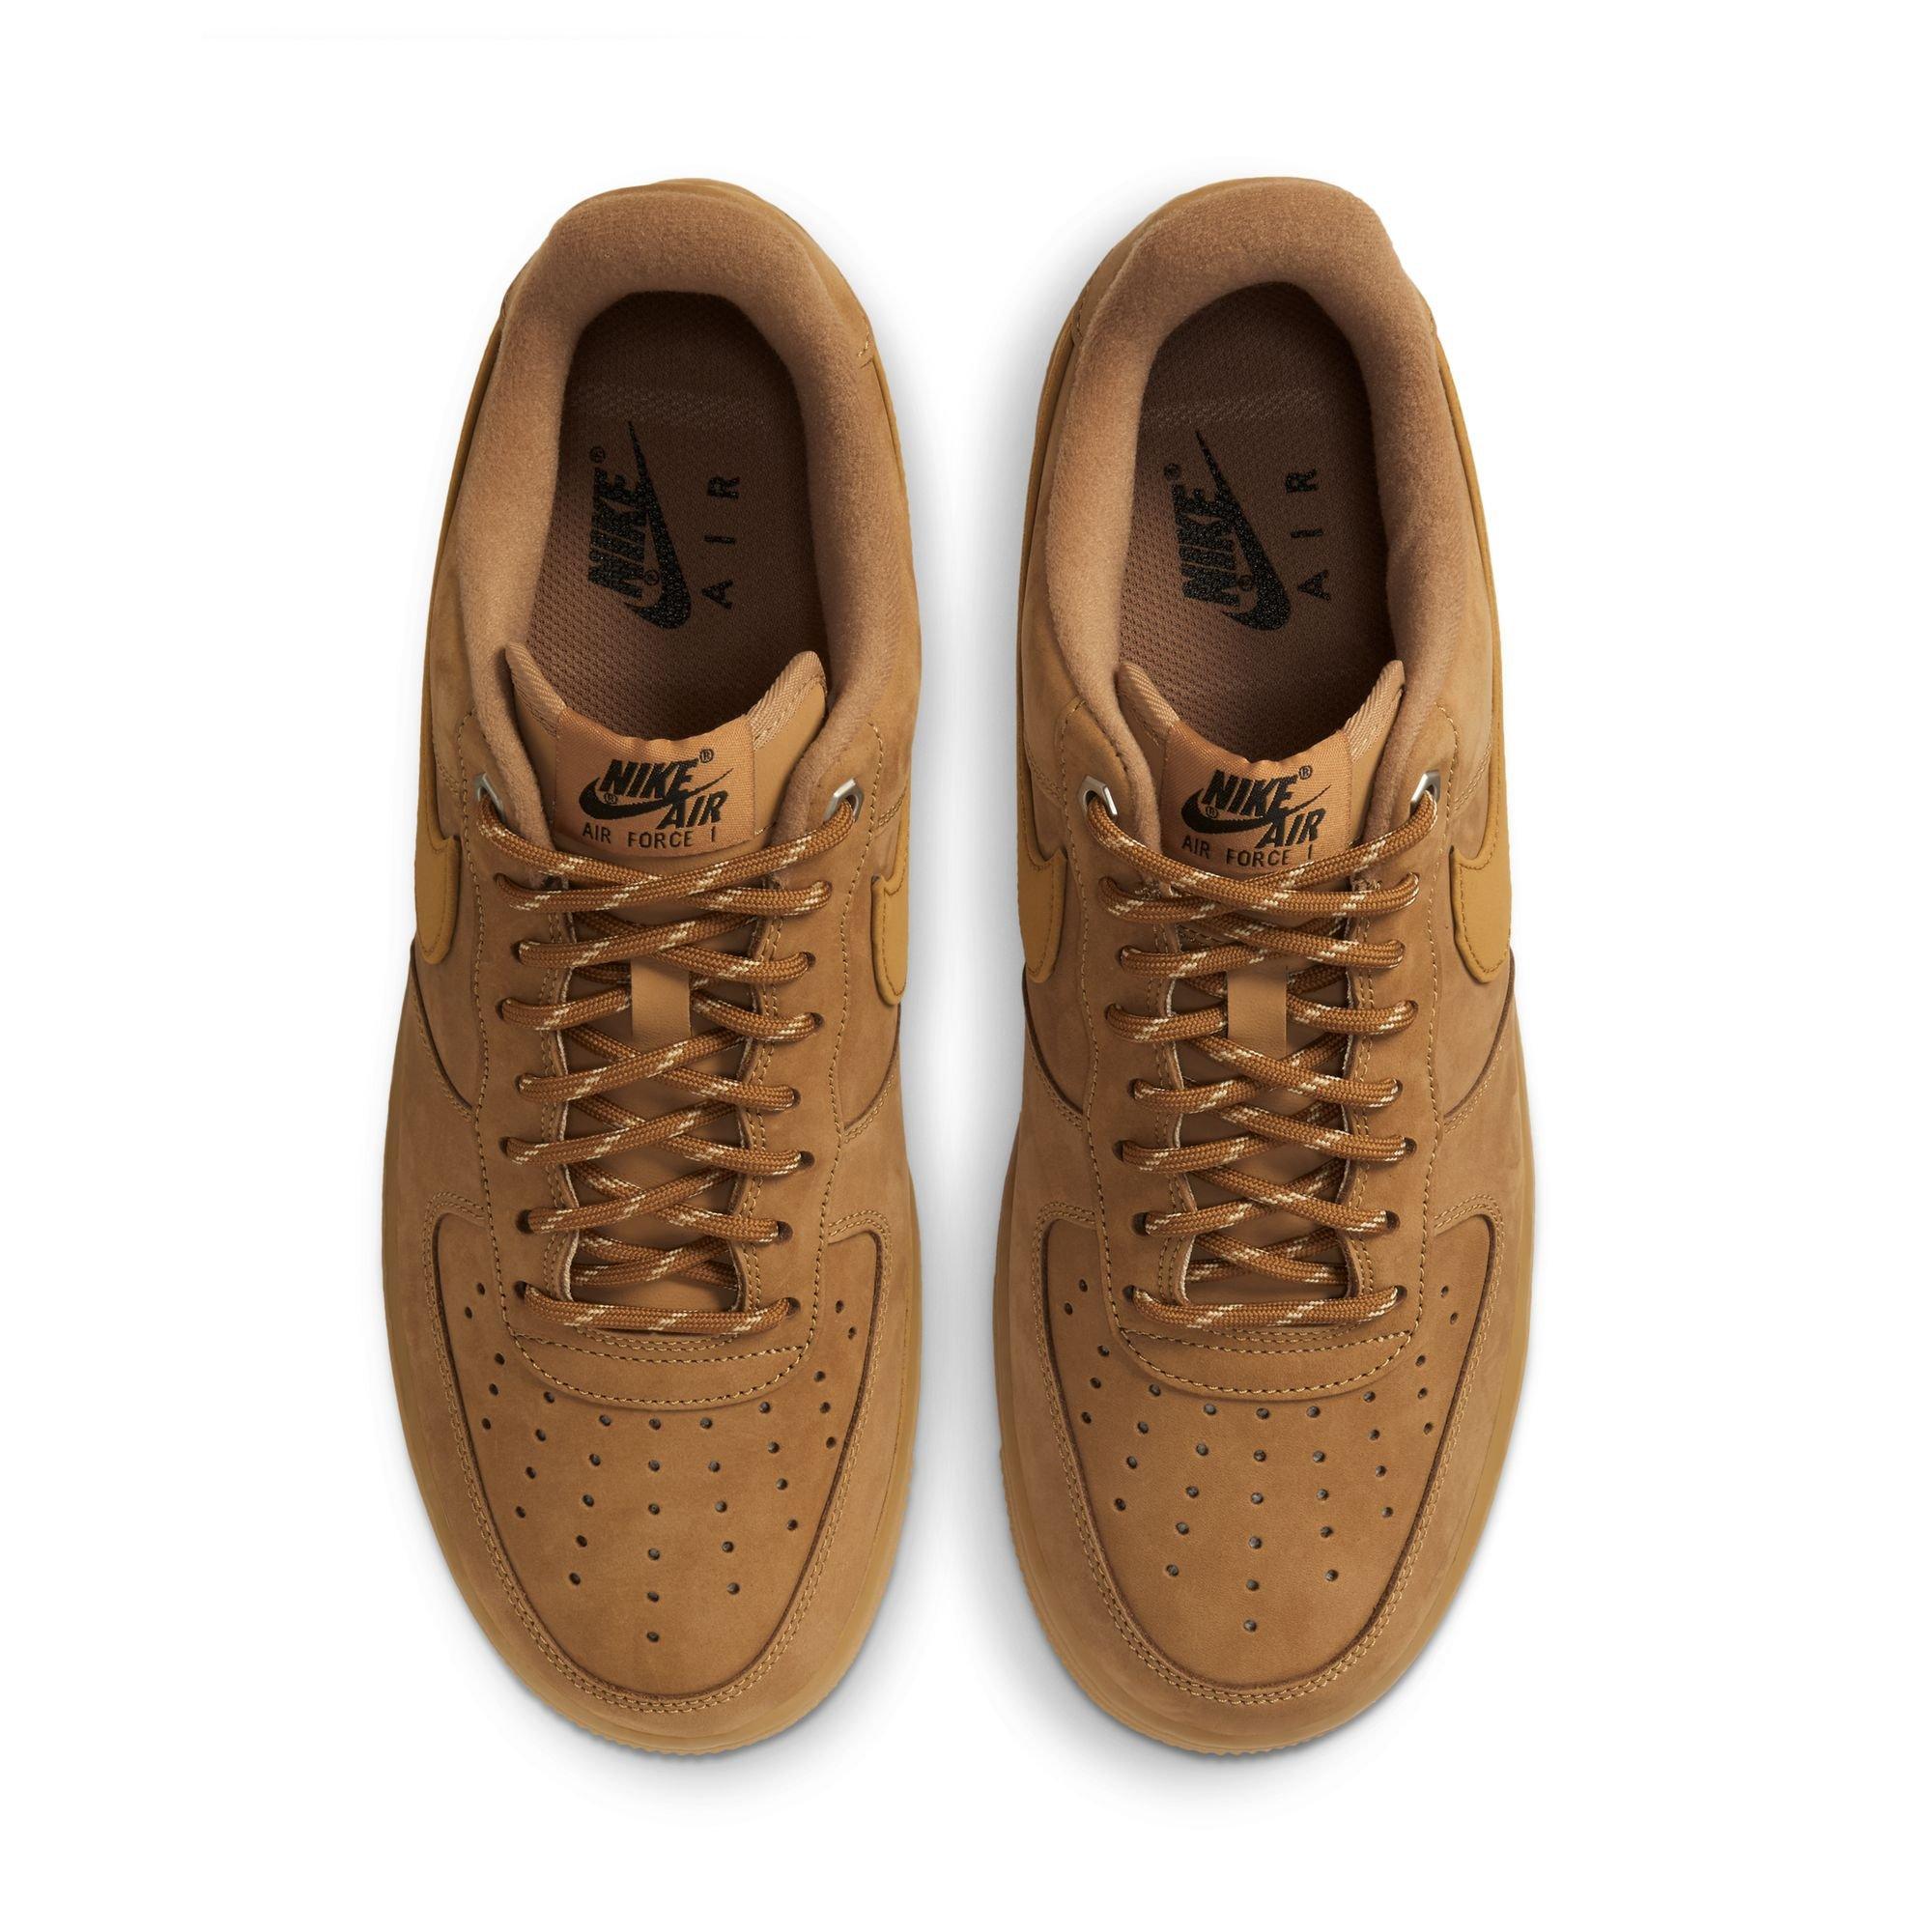 Nike Air Force 1 Mid 07 WB Flax Wheat Gum Brown Mens Shoes Size 14